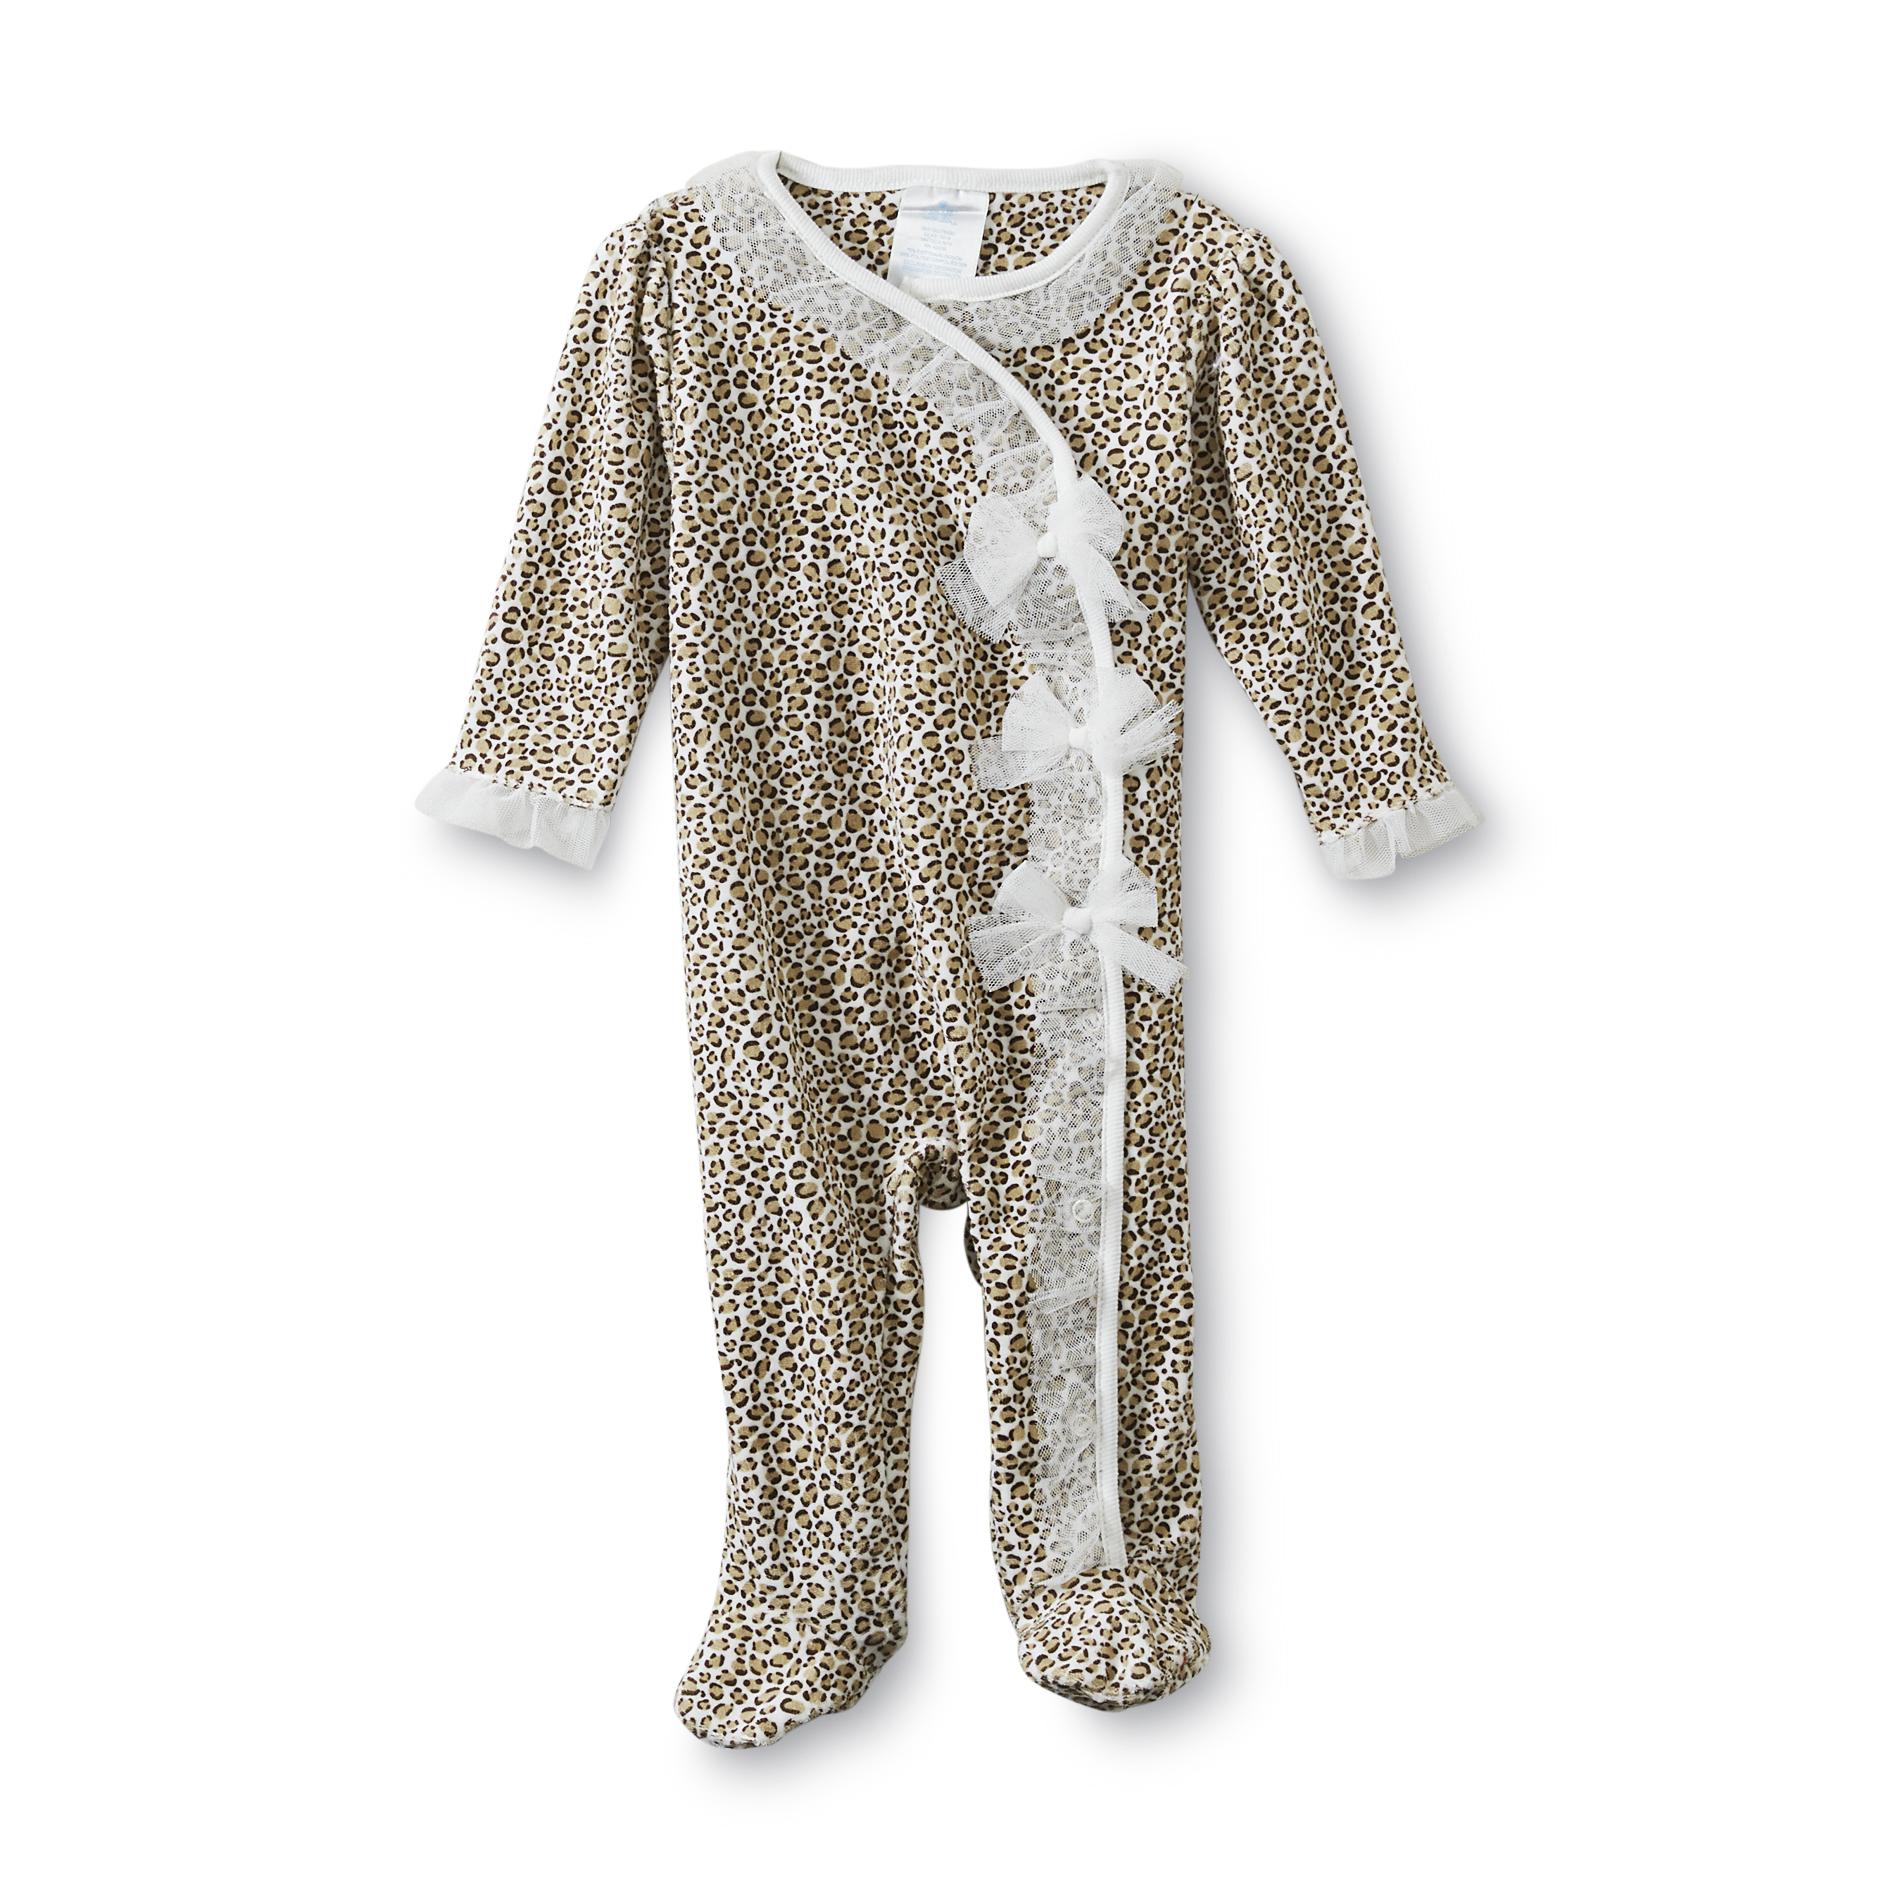 Small Wonders Newborn Girl's Velour Sleeper Pajamas - Leopard Print